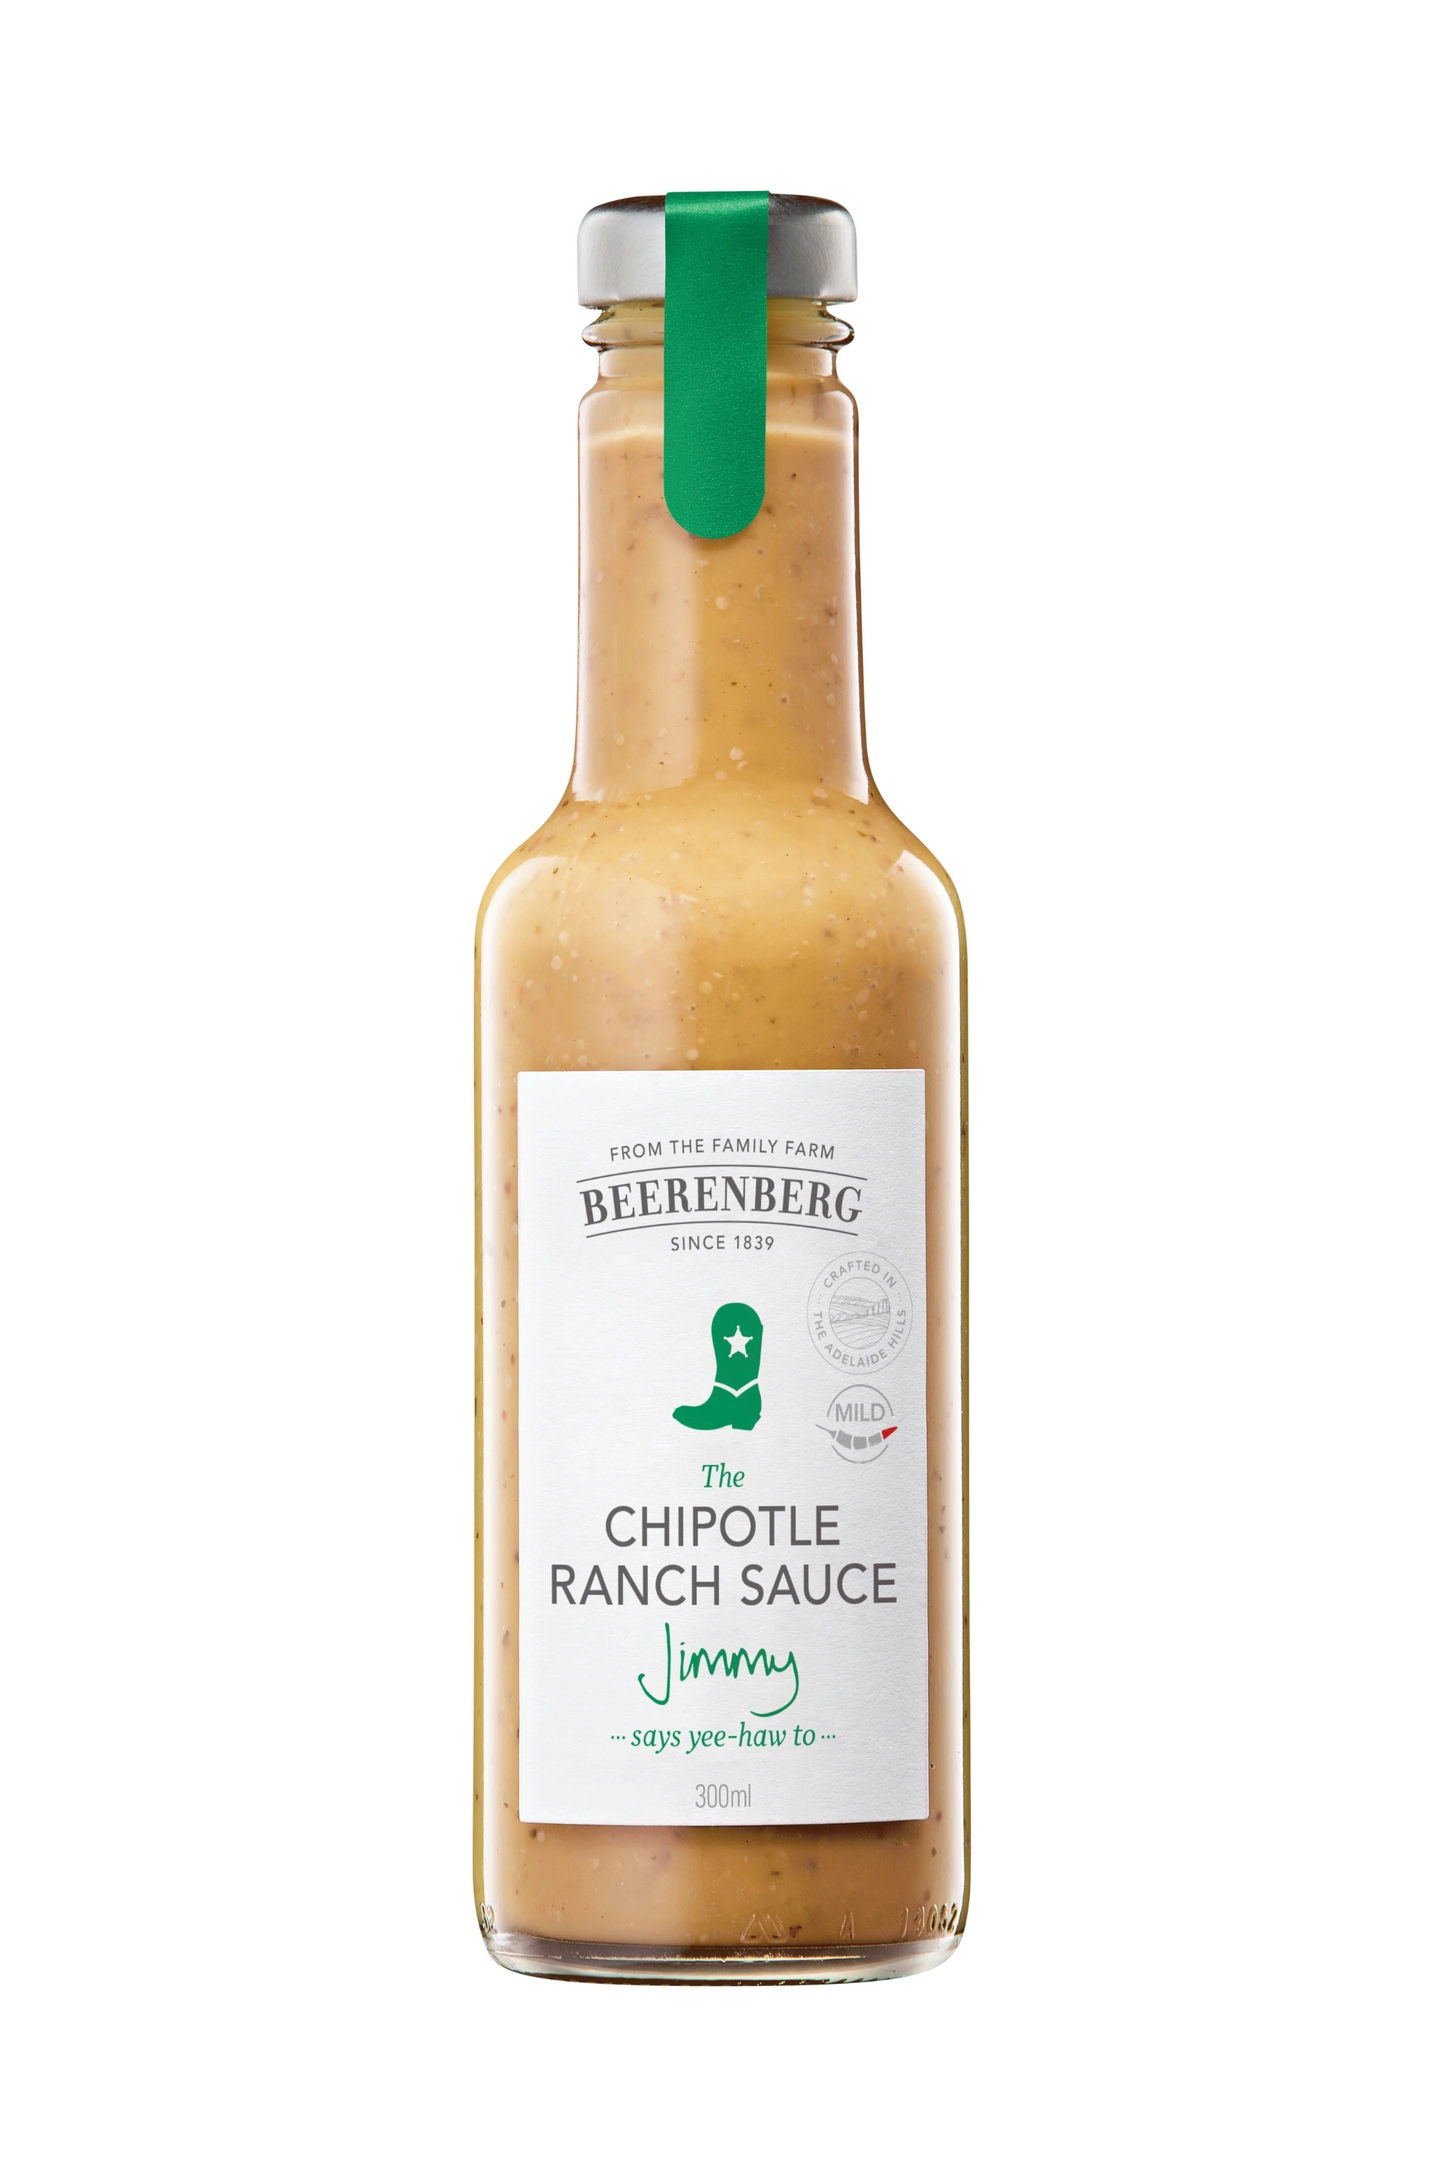 Beerenberg Chipotle Ranch Sauce 300ml